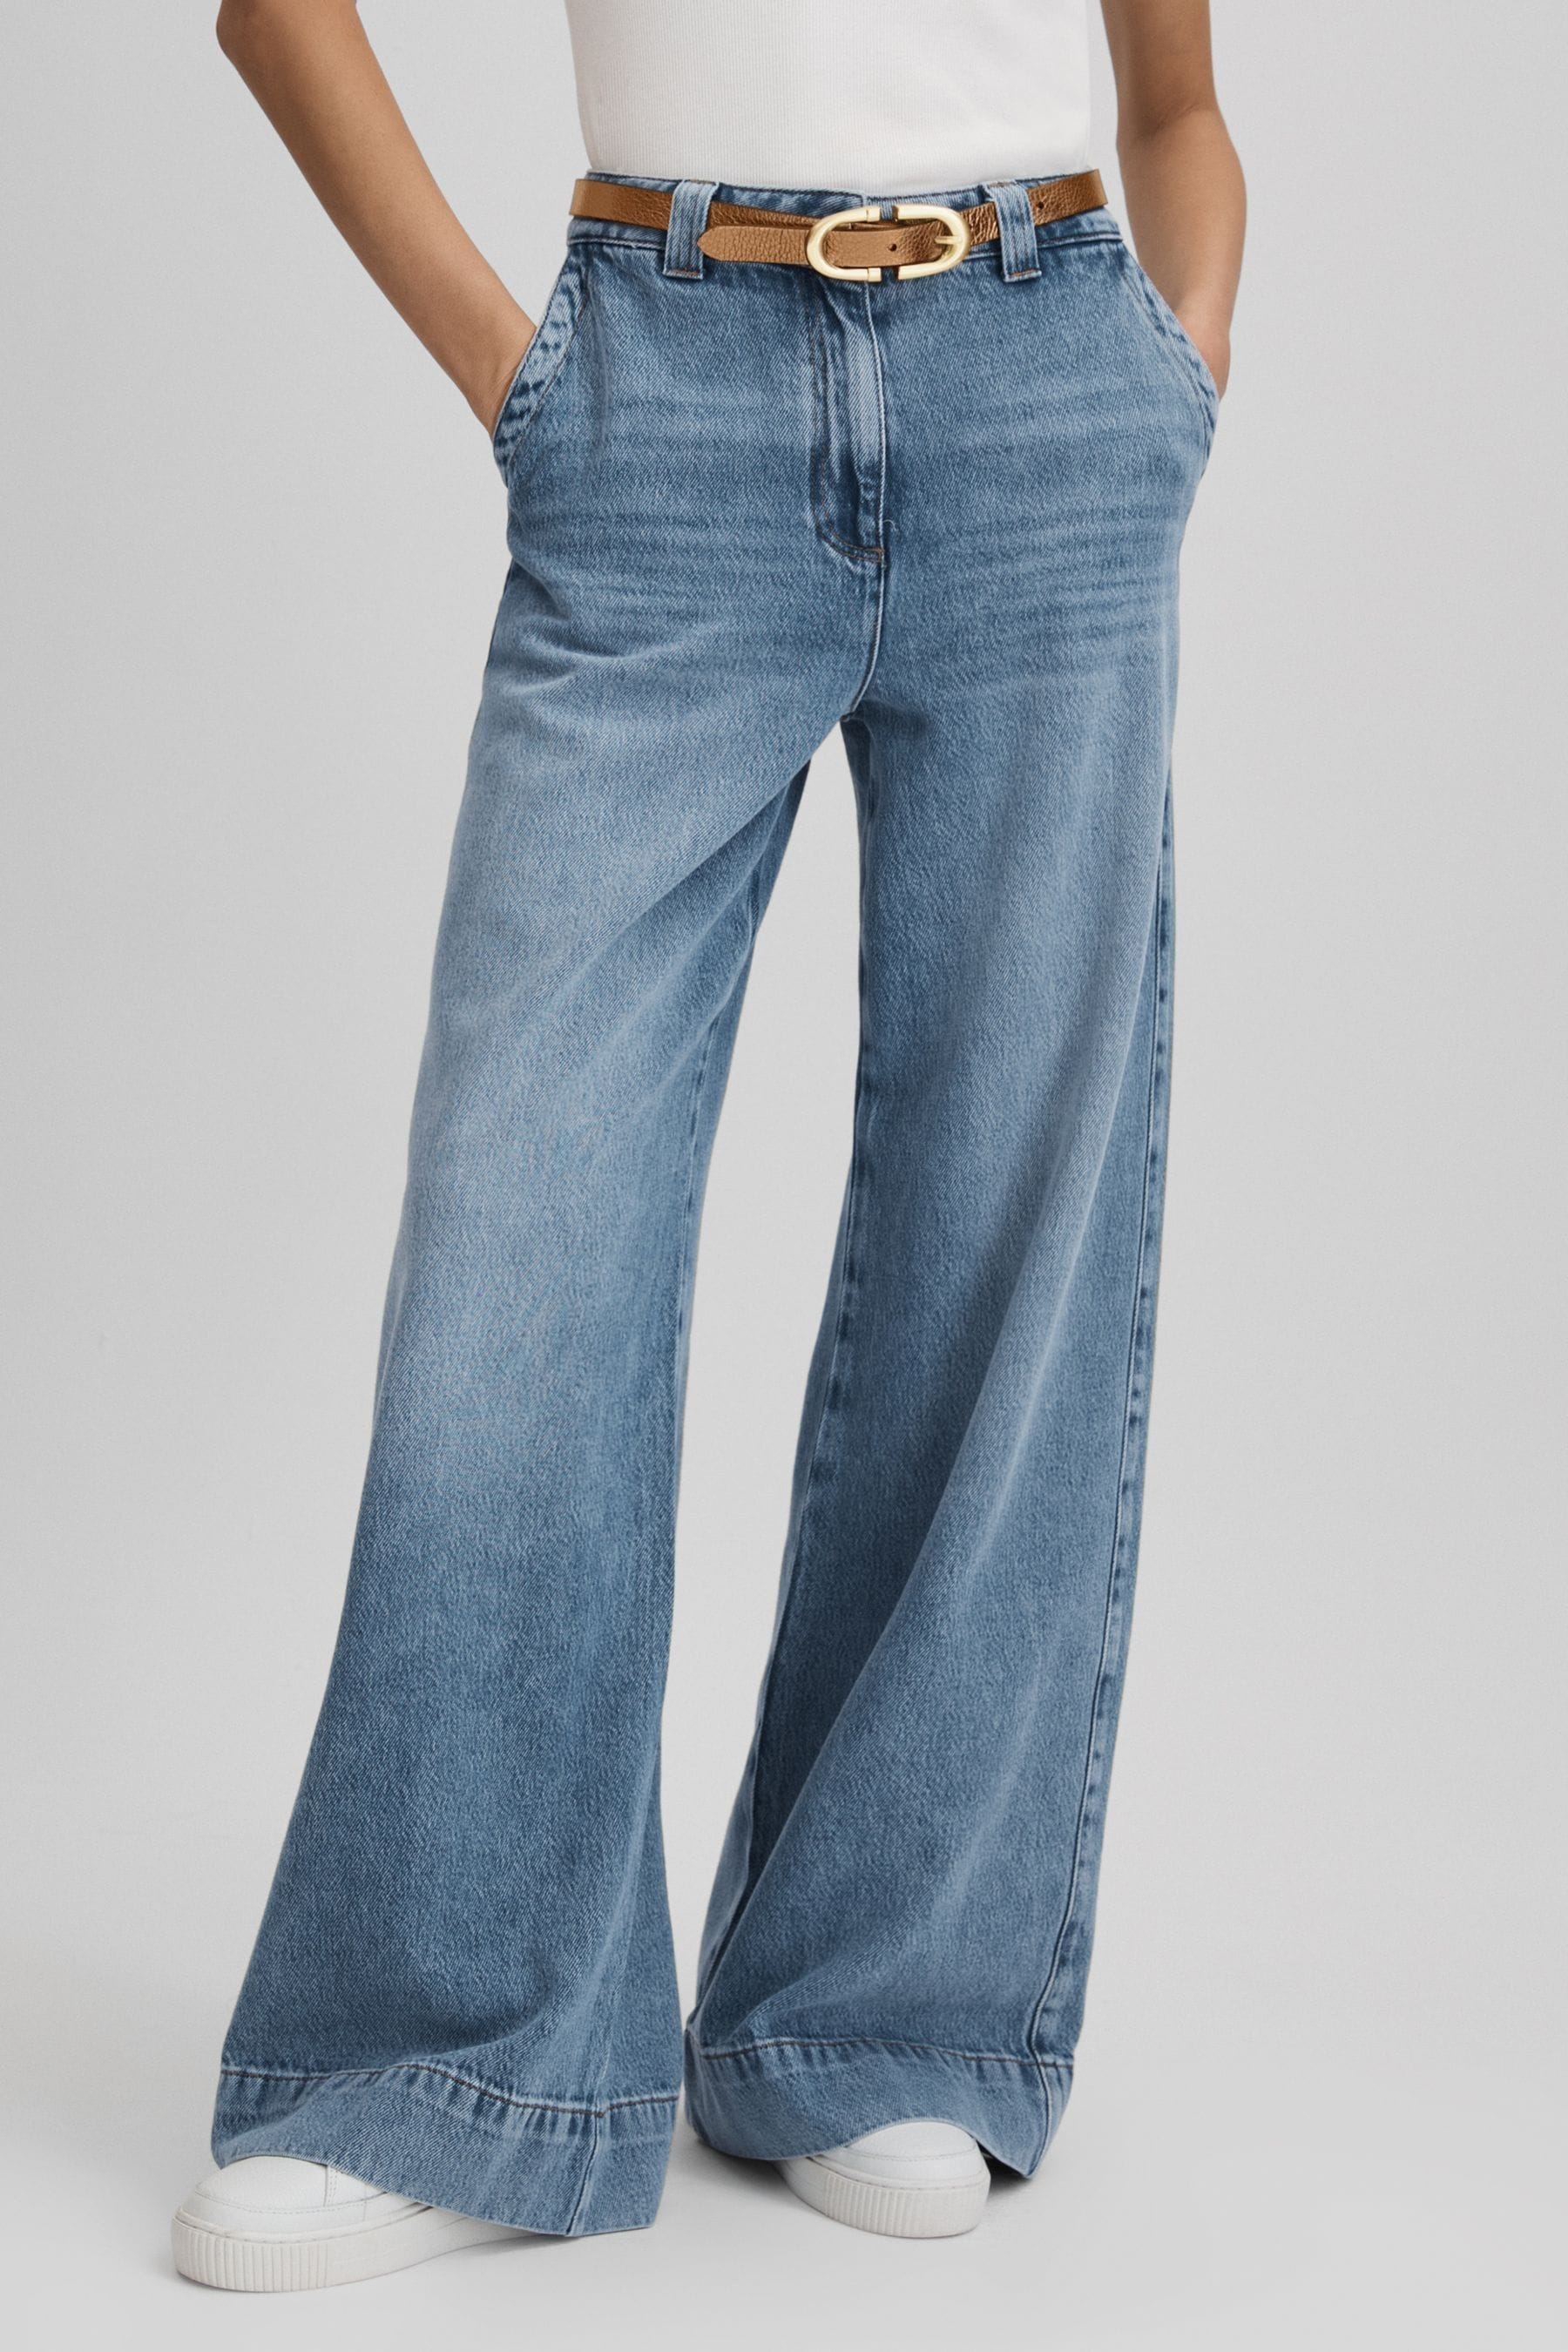 Reiss Olivia - Light Blue Wide Leg Contrast Stitch Jeans, Uk 24 R